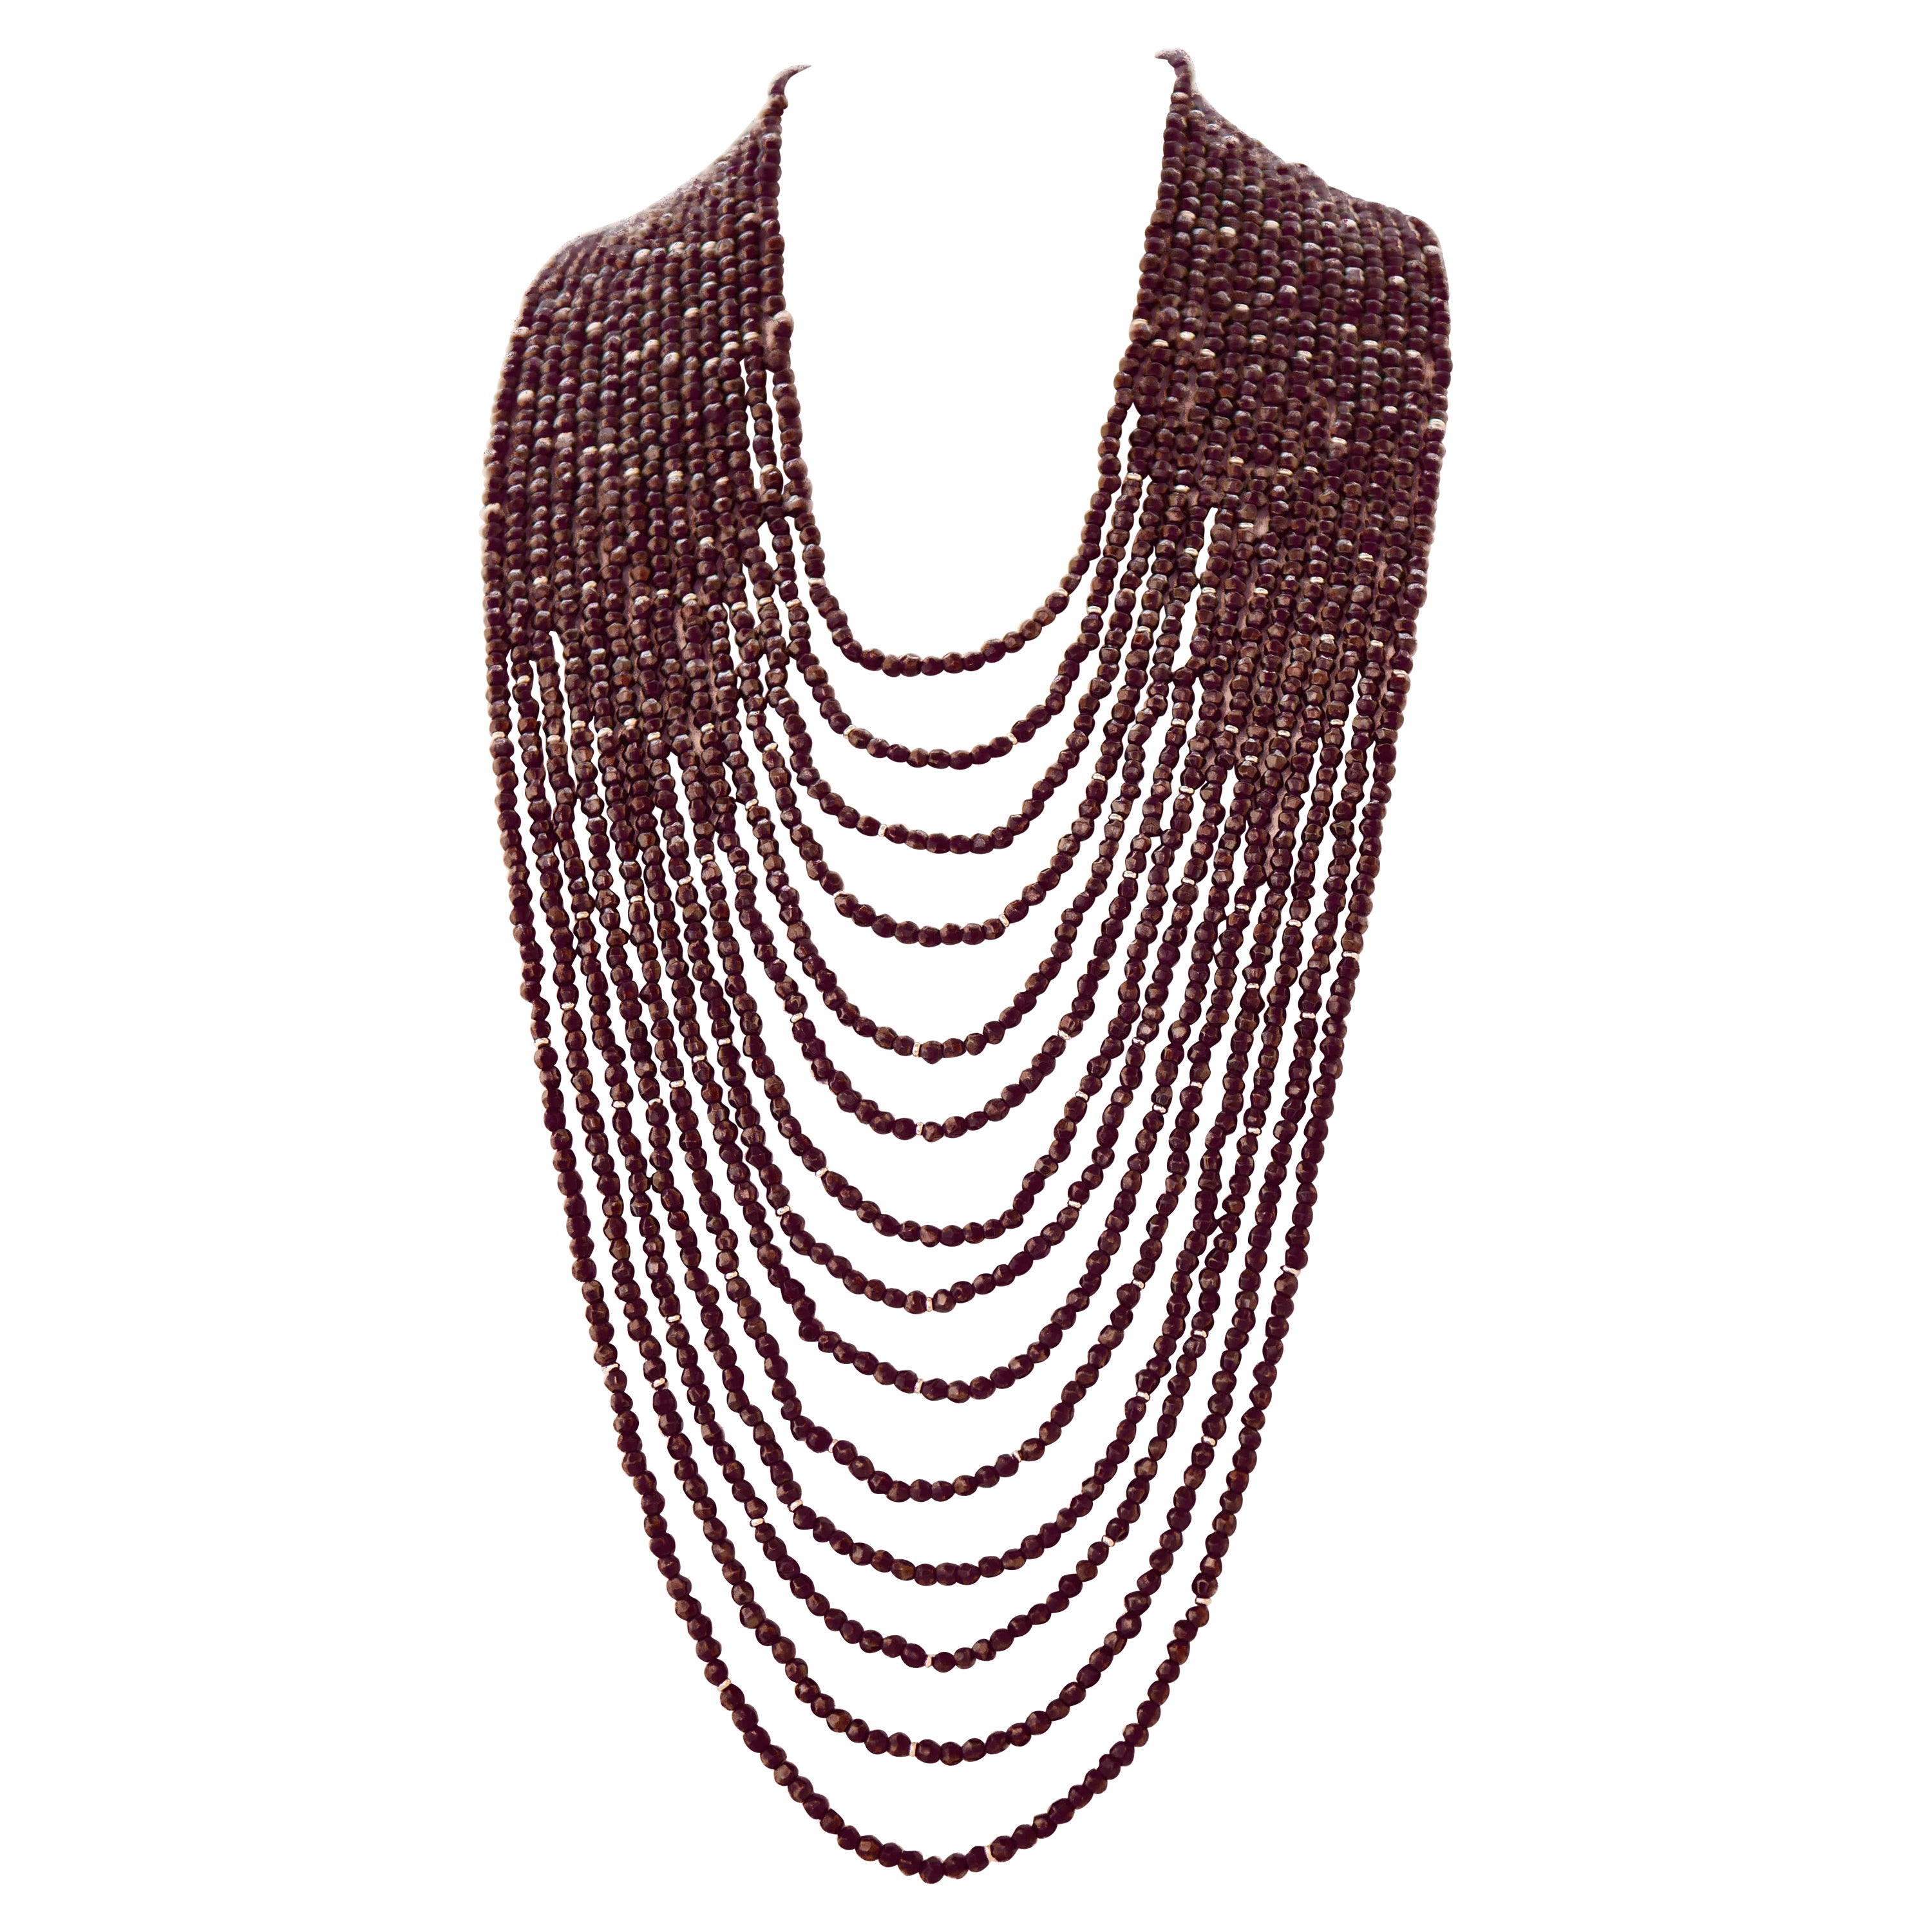 Garnets, Multi-Strands Necklace